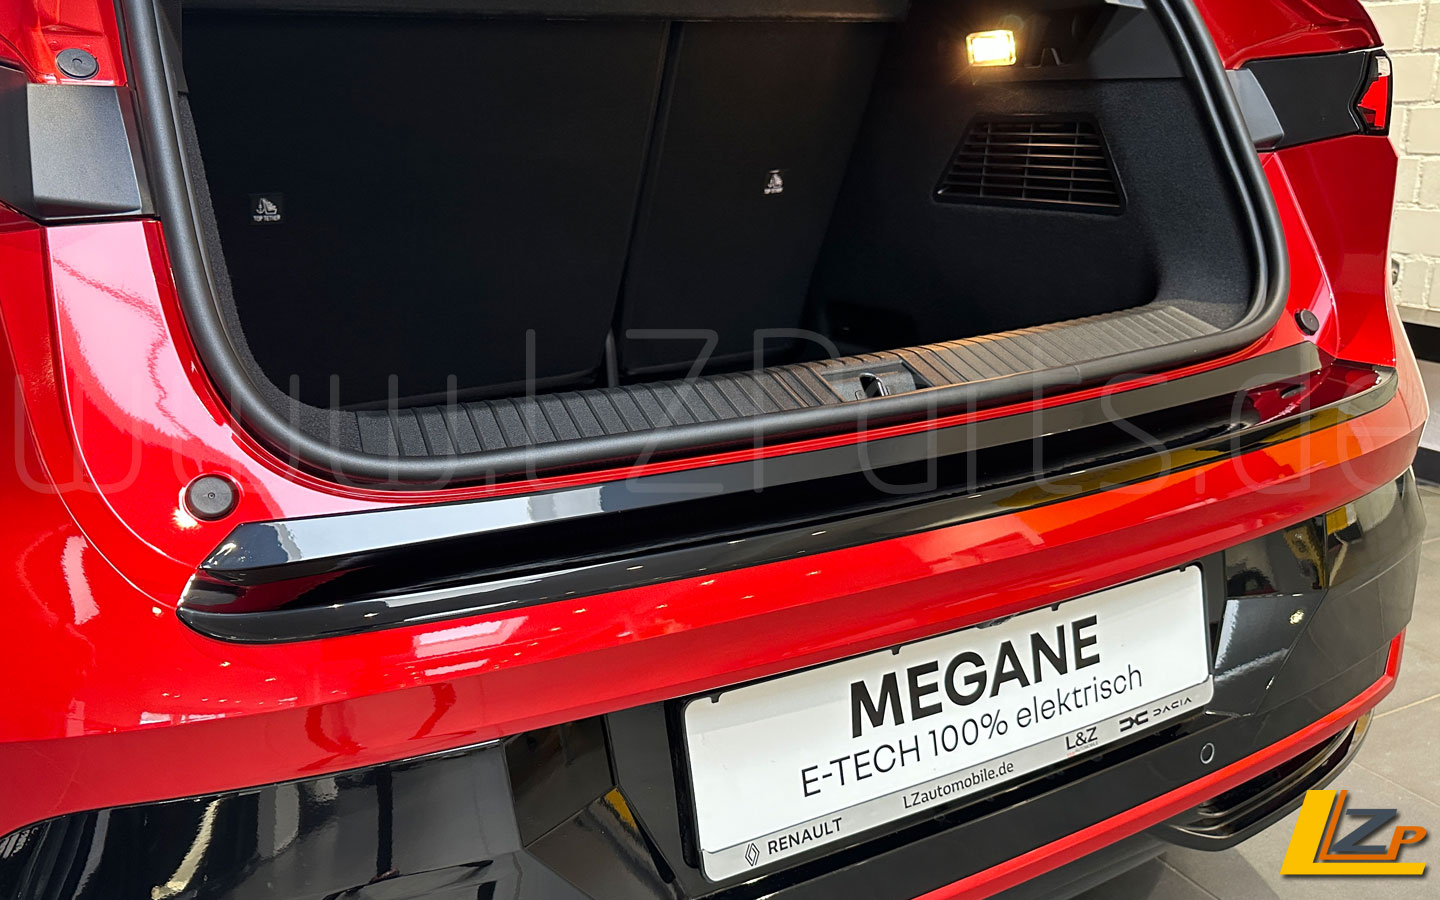 Renault MeganE Electric E-Tech EV Ladekantenschutz Außen-RMETLKSA | Abdeckblenden